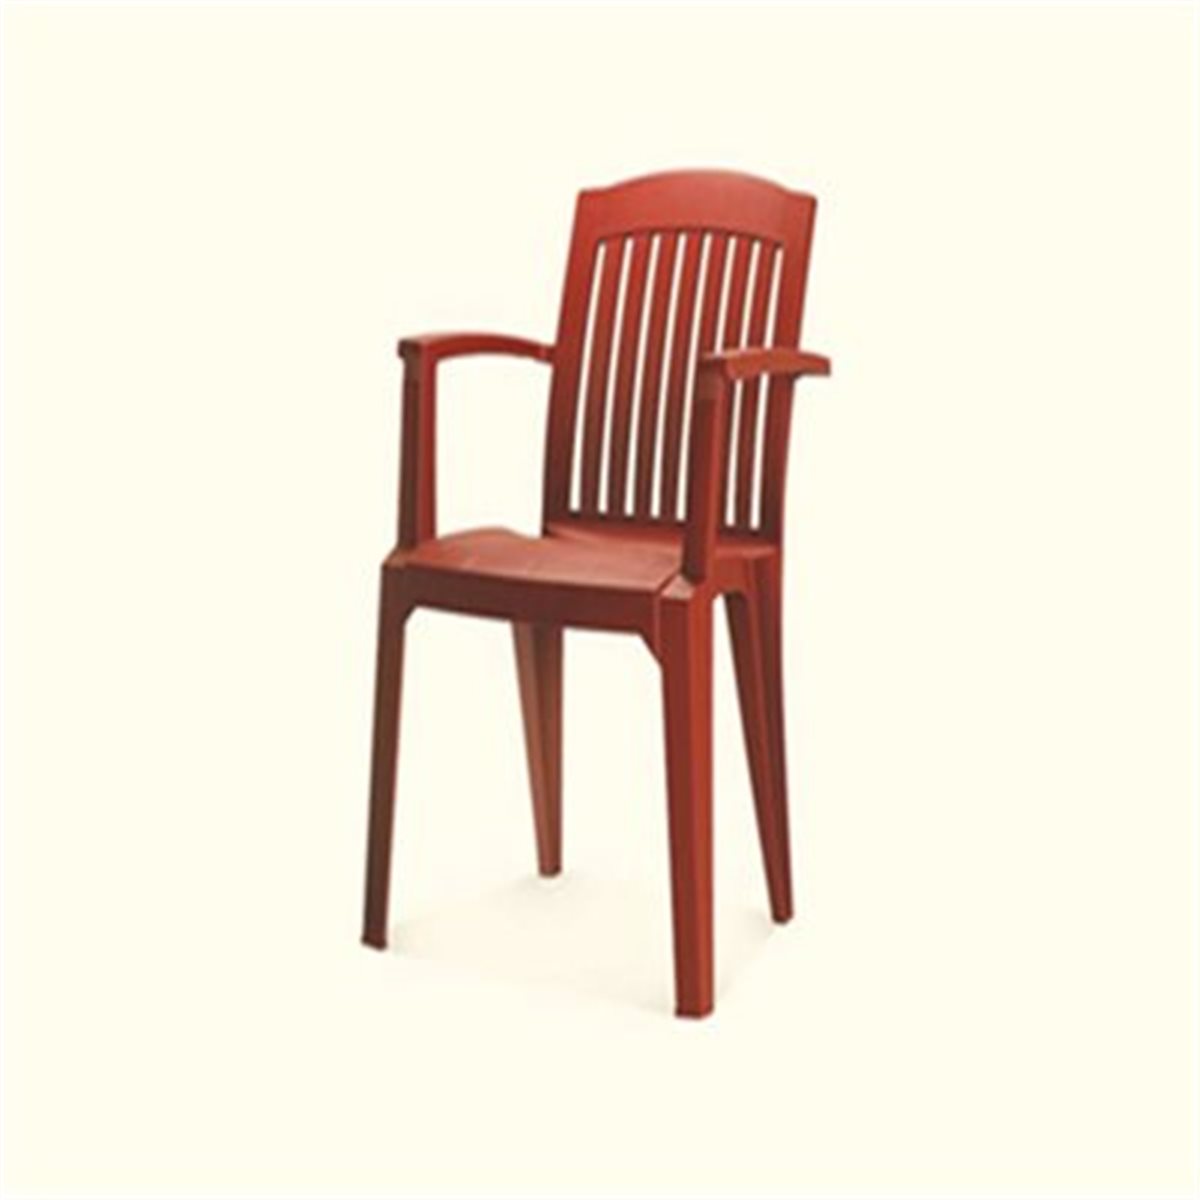 nilkamal plastic outdoor chair chr 2136 set of 4 mrp 390000 our  price 380000